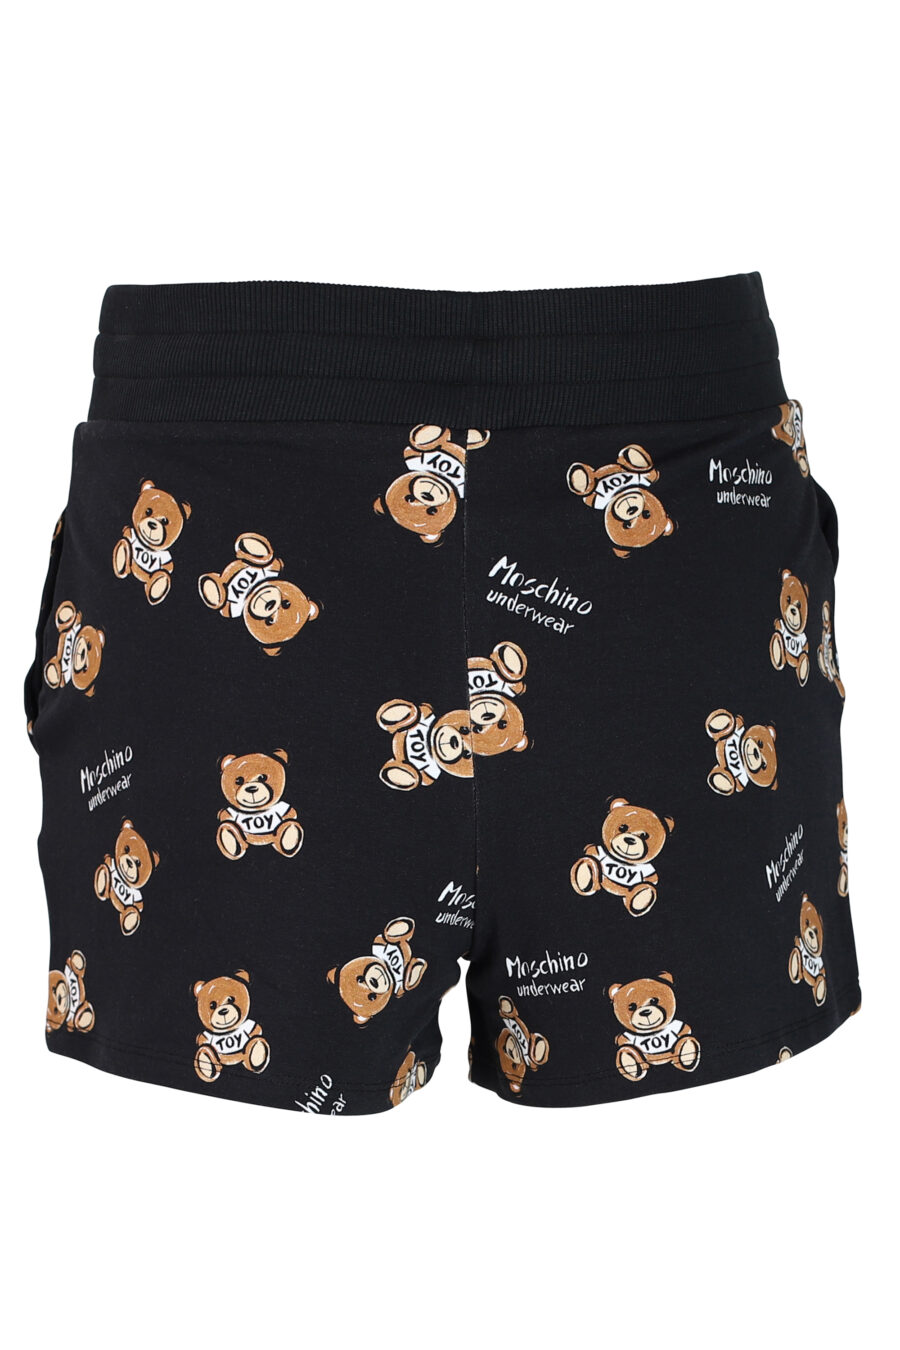 Black shorts "all over logo" bear underbear - IMG 0299